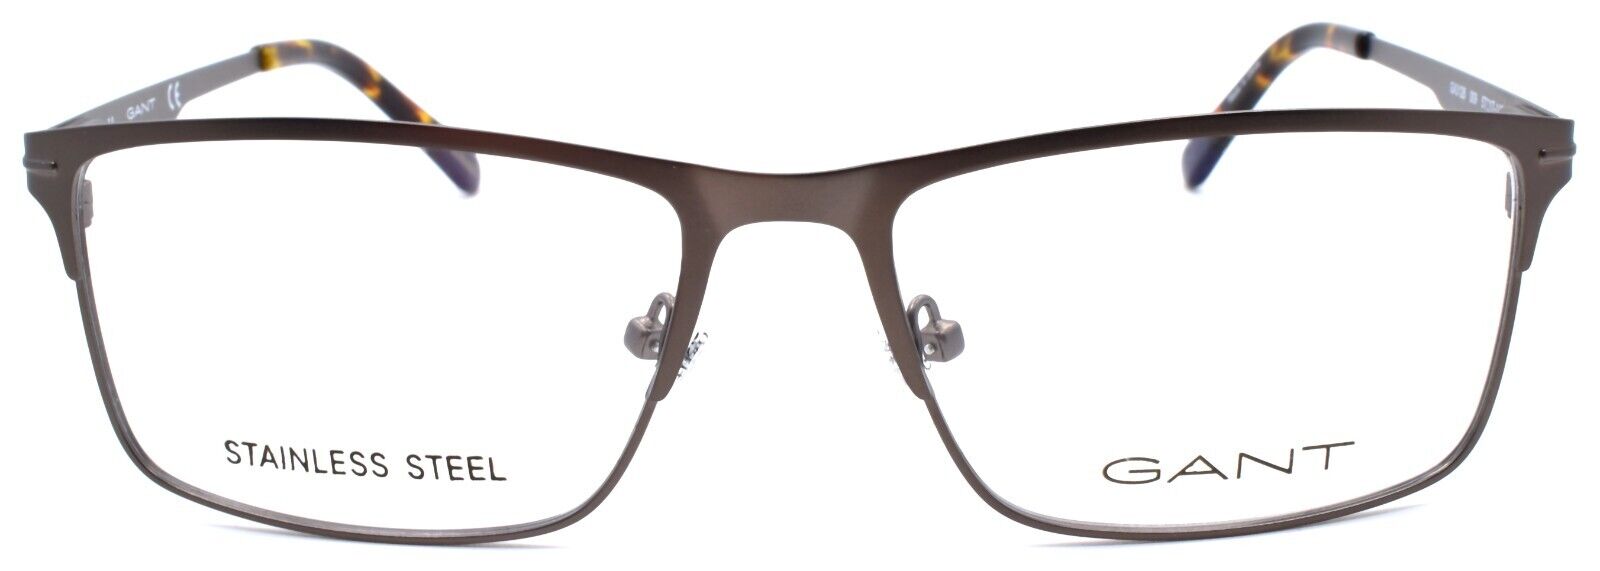 2-GANT GA3128 009 Men's Eyeglasses Frames 57-17-145 Matte Gunmetal-664689845415-IKSpecs